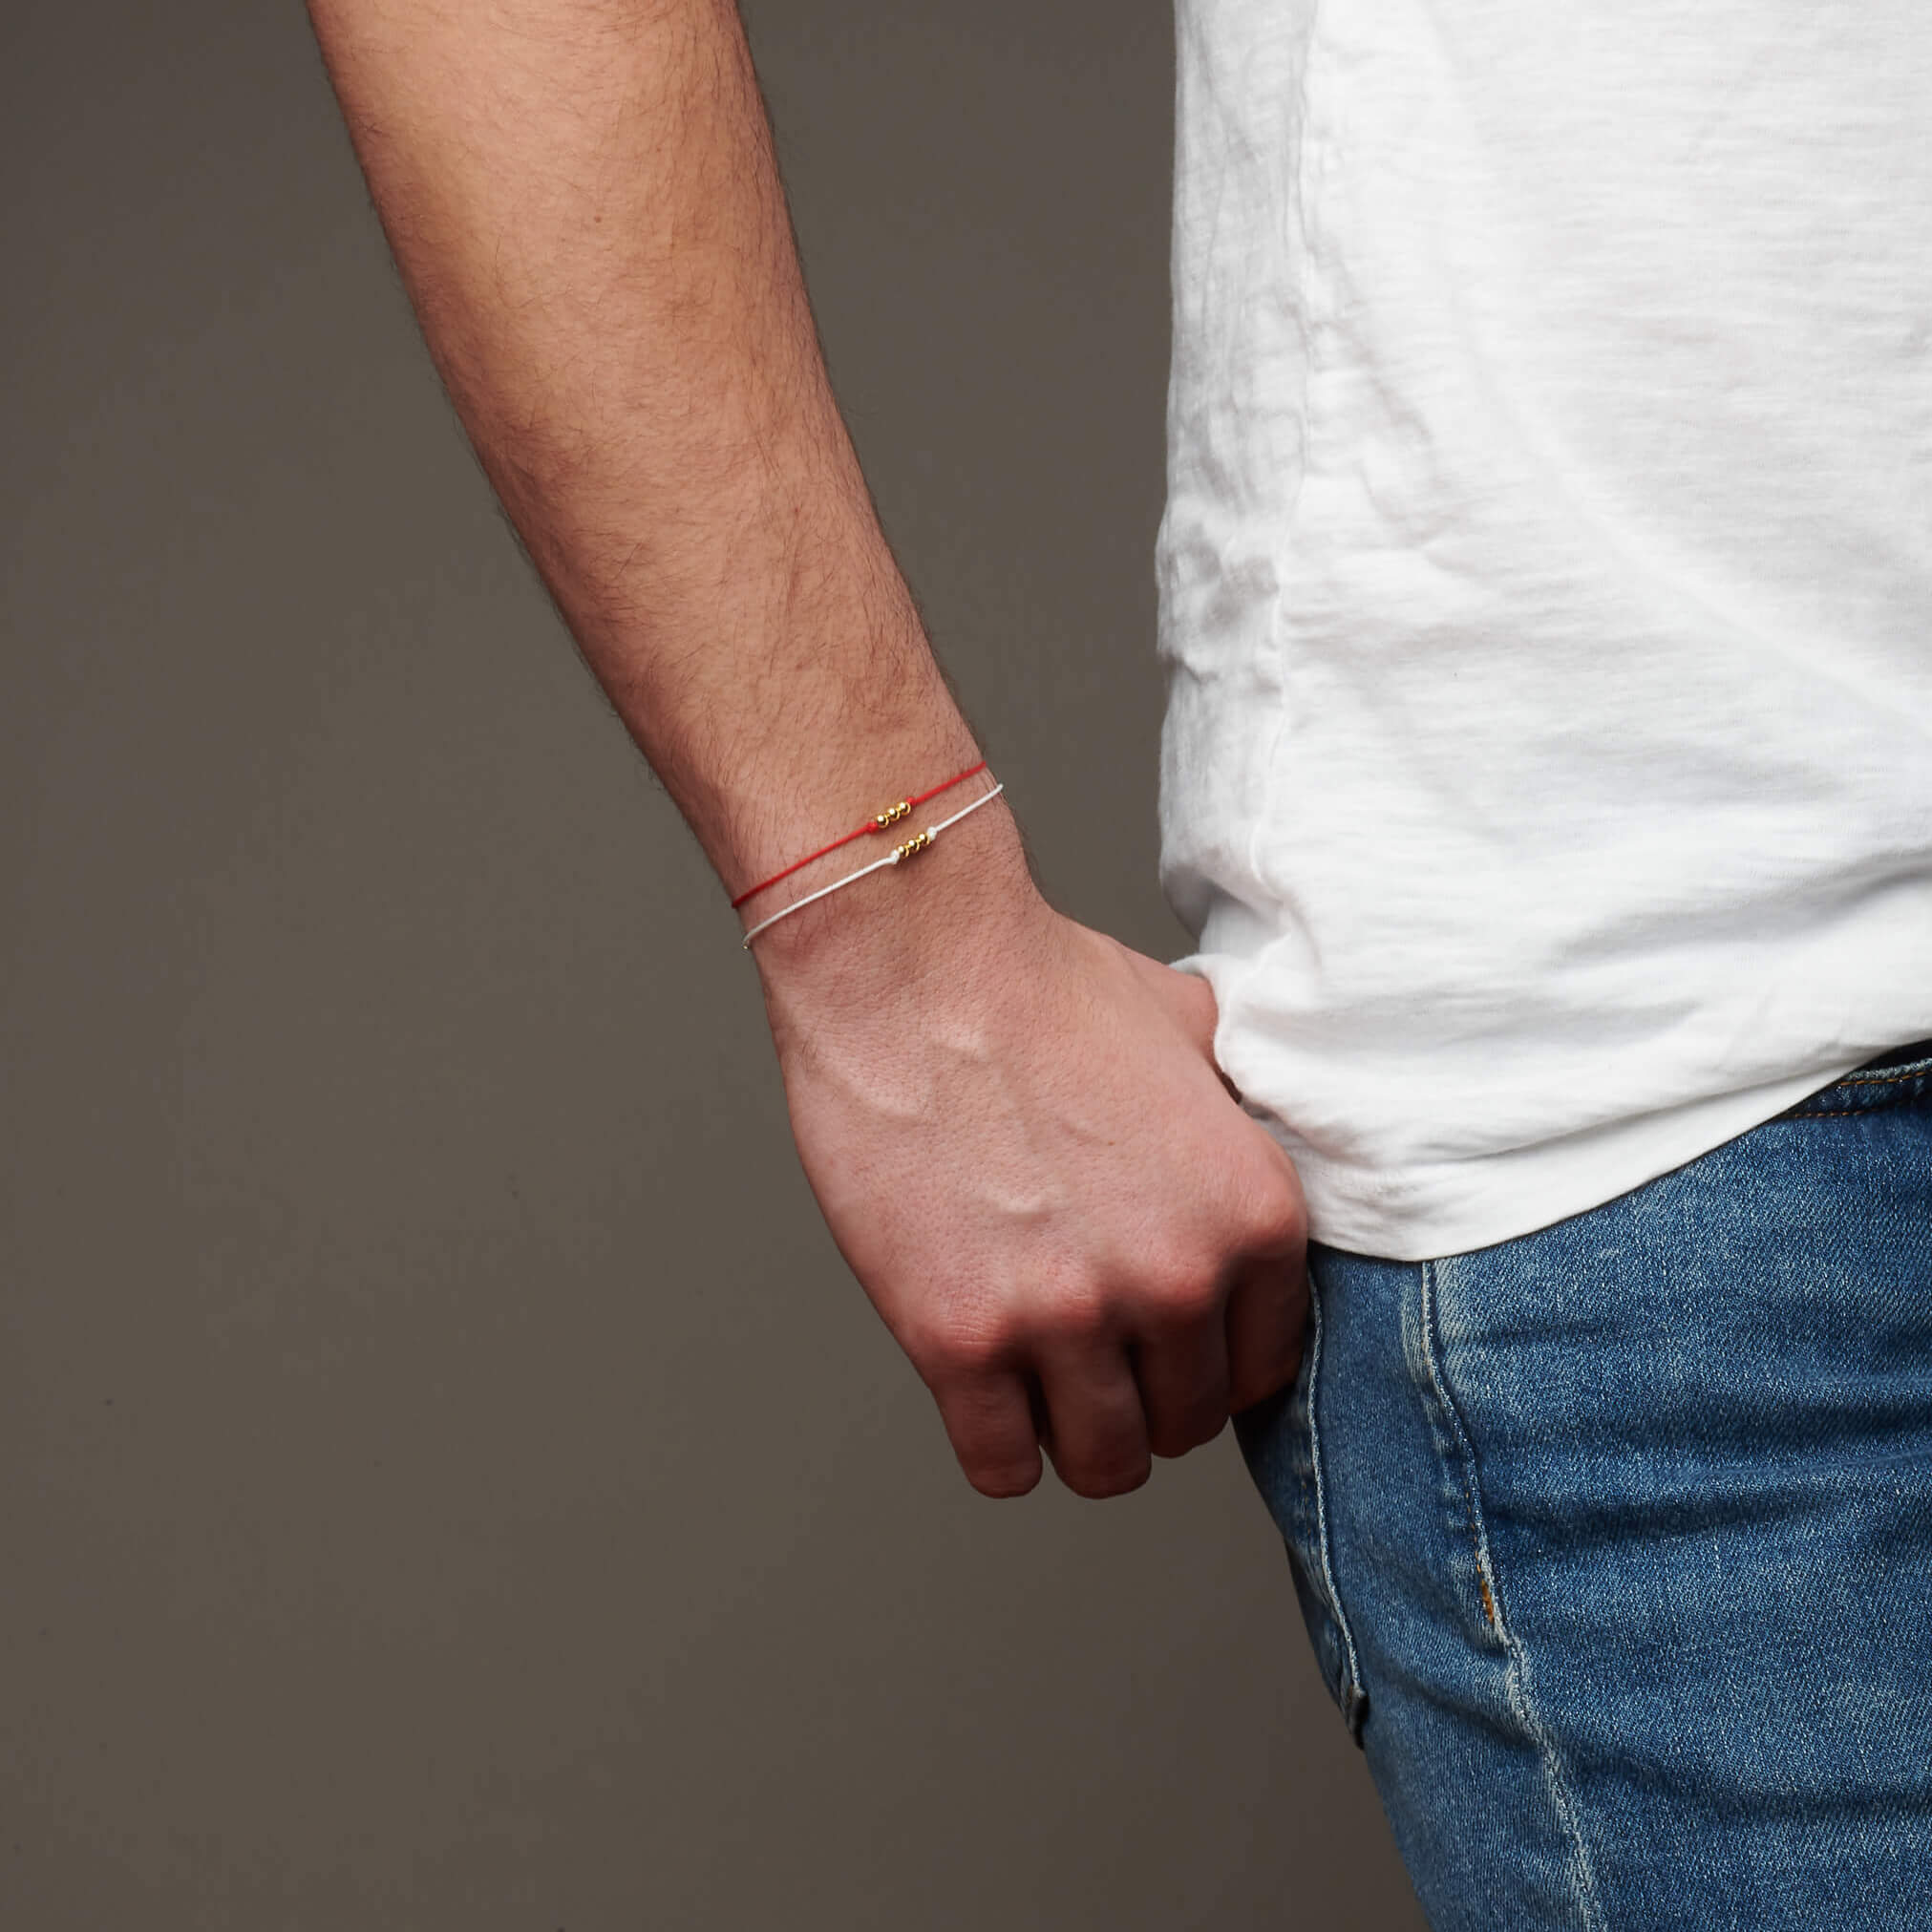 Hand on hip facing forward showing wrist wearing 2 string bracelets